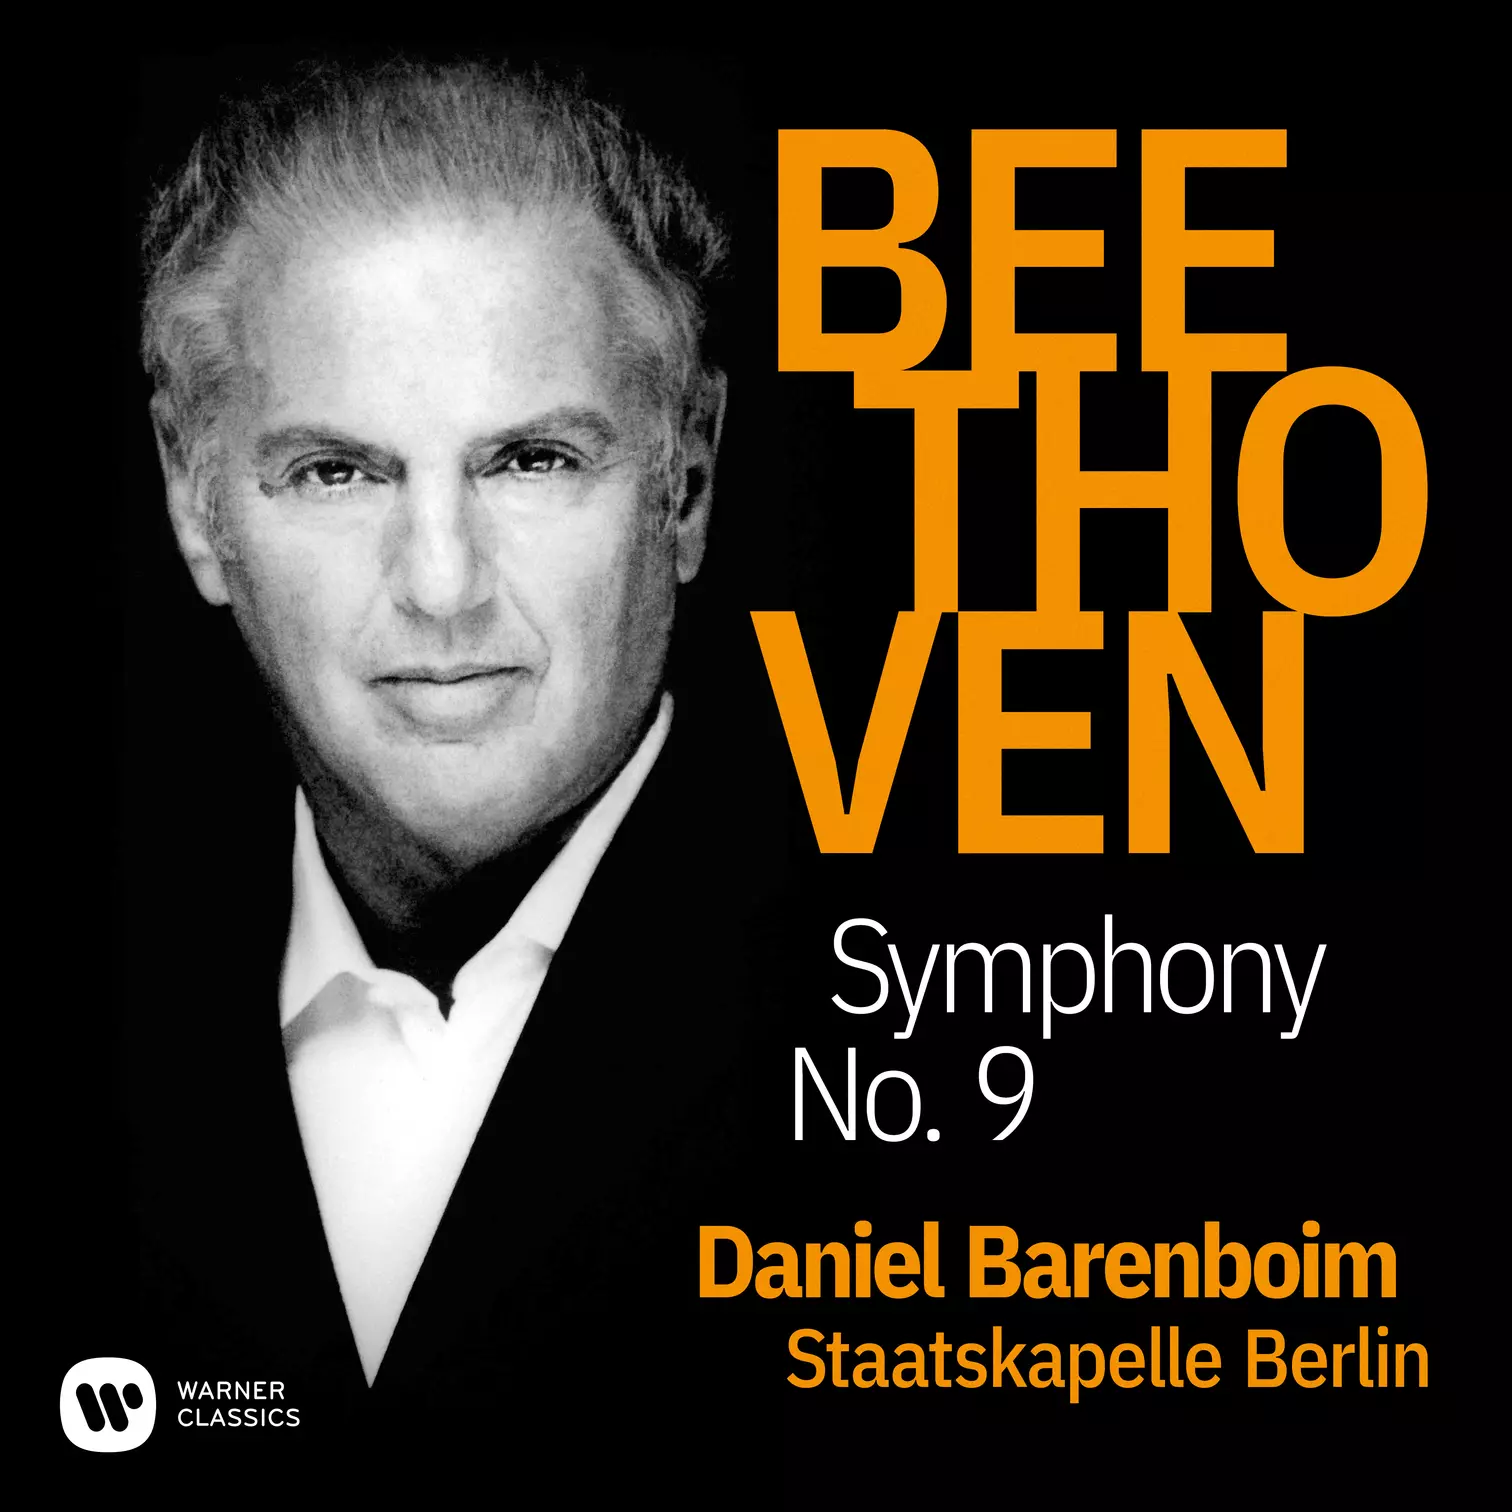 Beethoven: Symphony No. 9